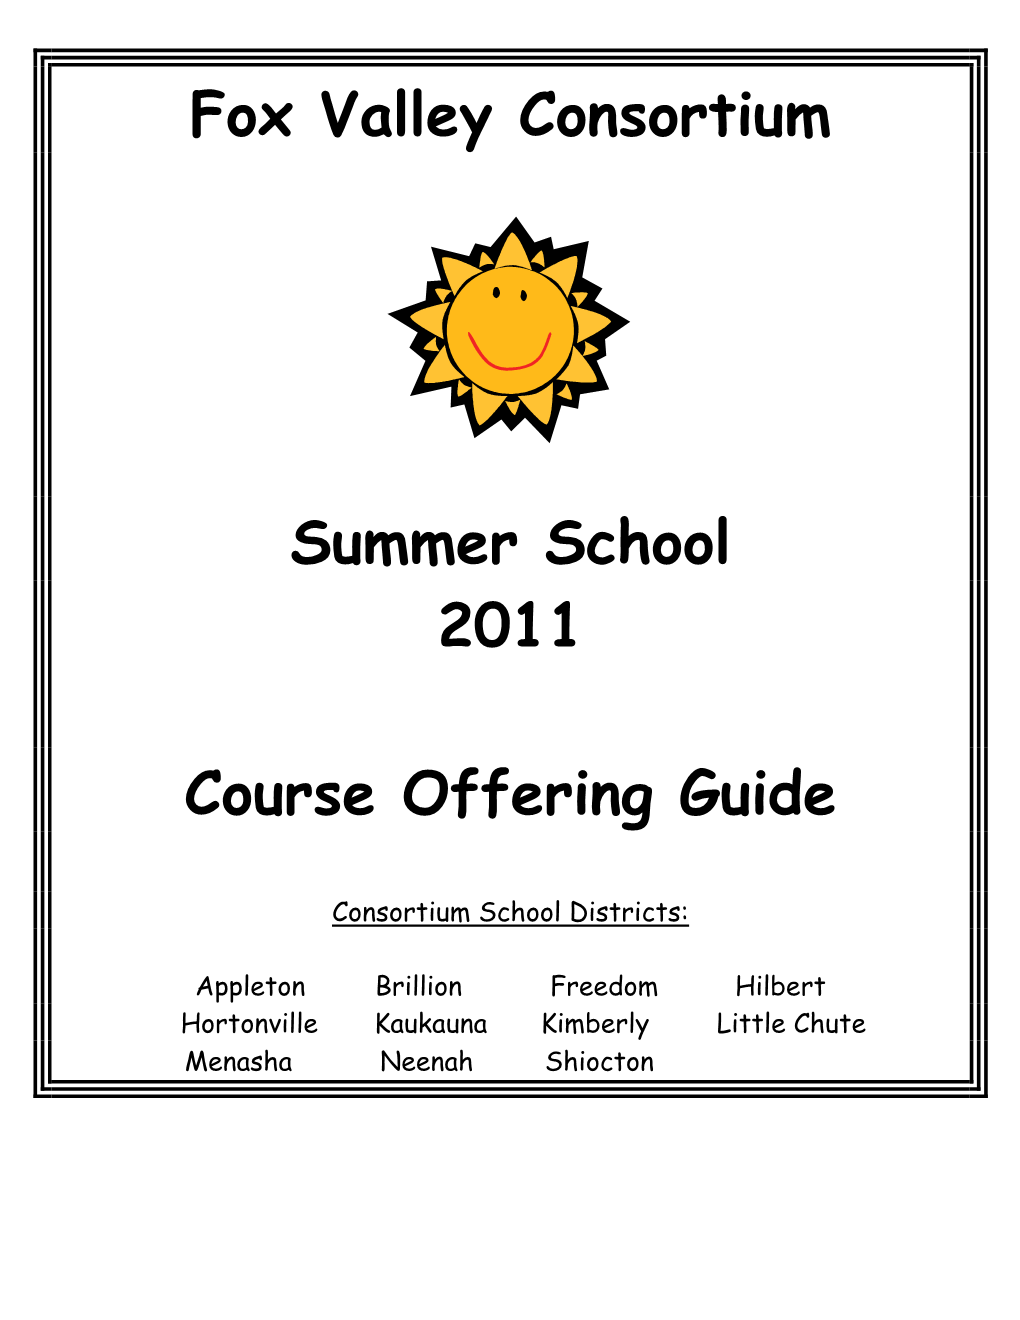 Fox Valley Consortium Summer School 2011 Course Offering Guide